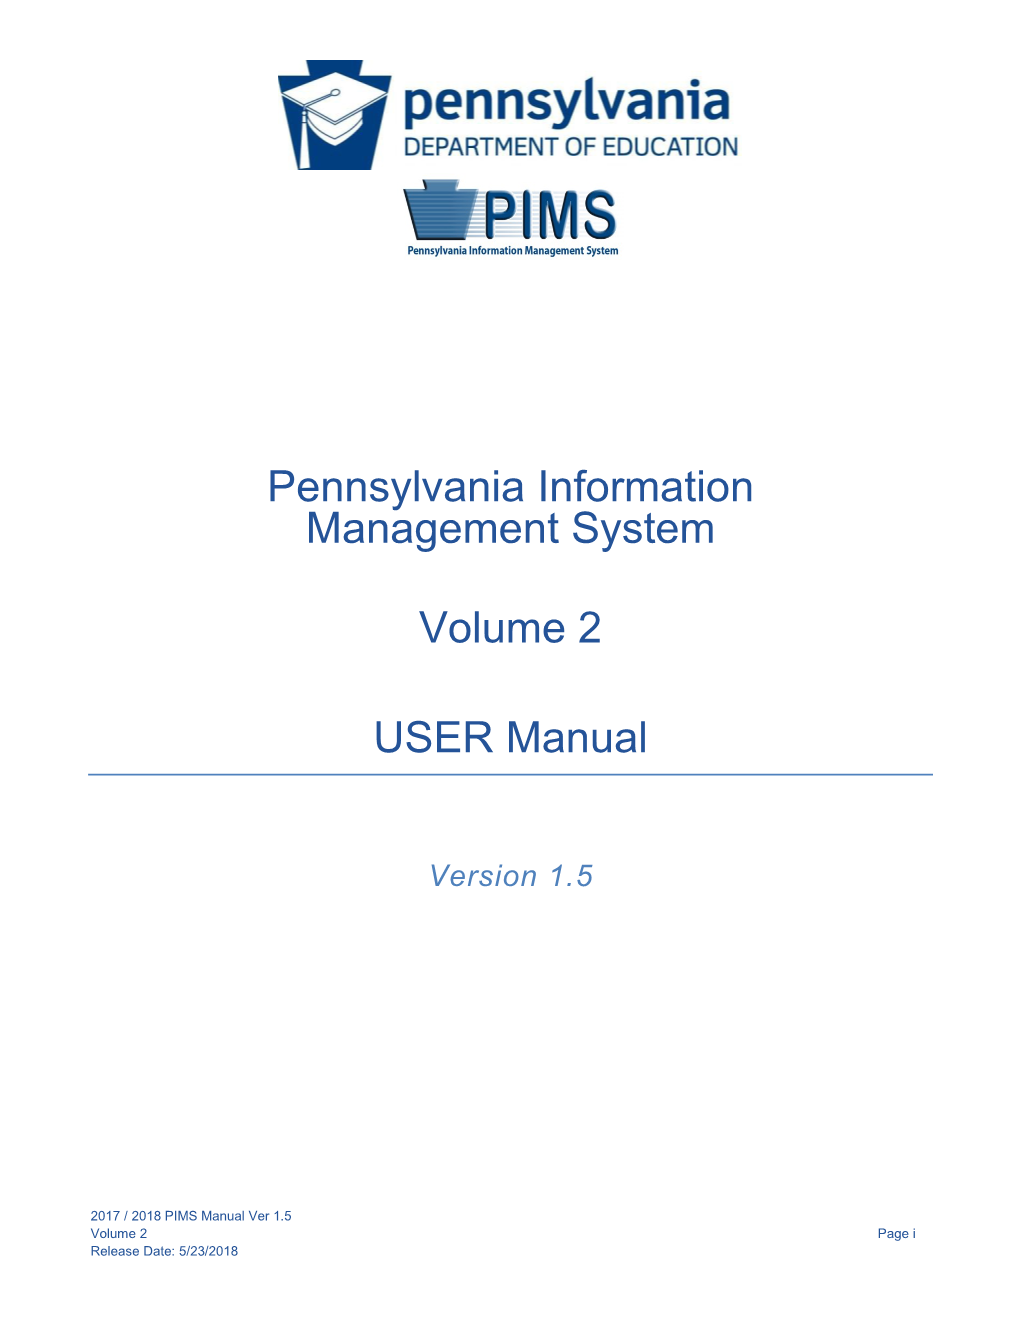 \PIMS Manual Volume 2 2017-18